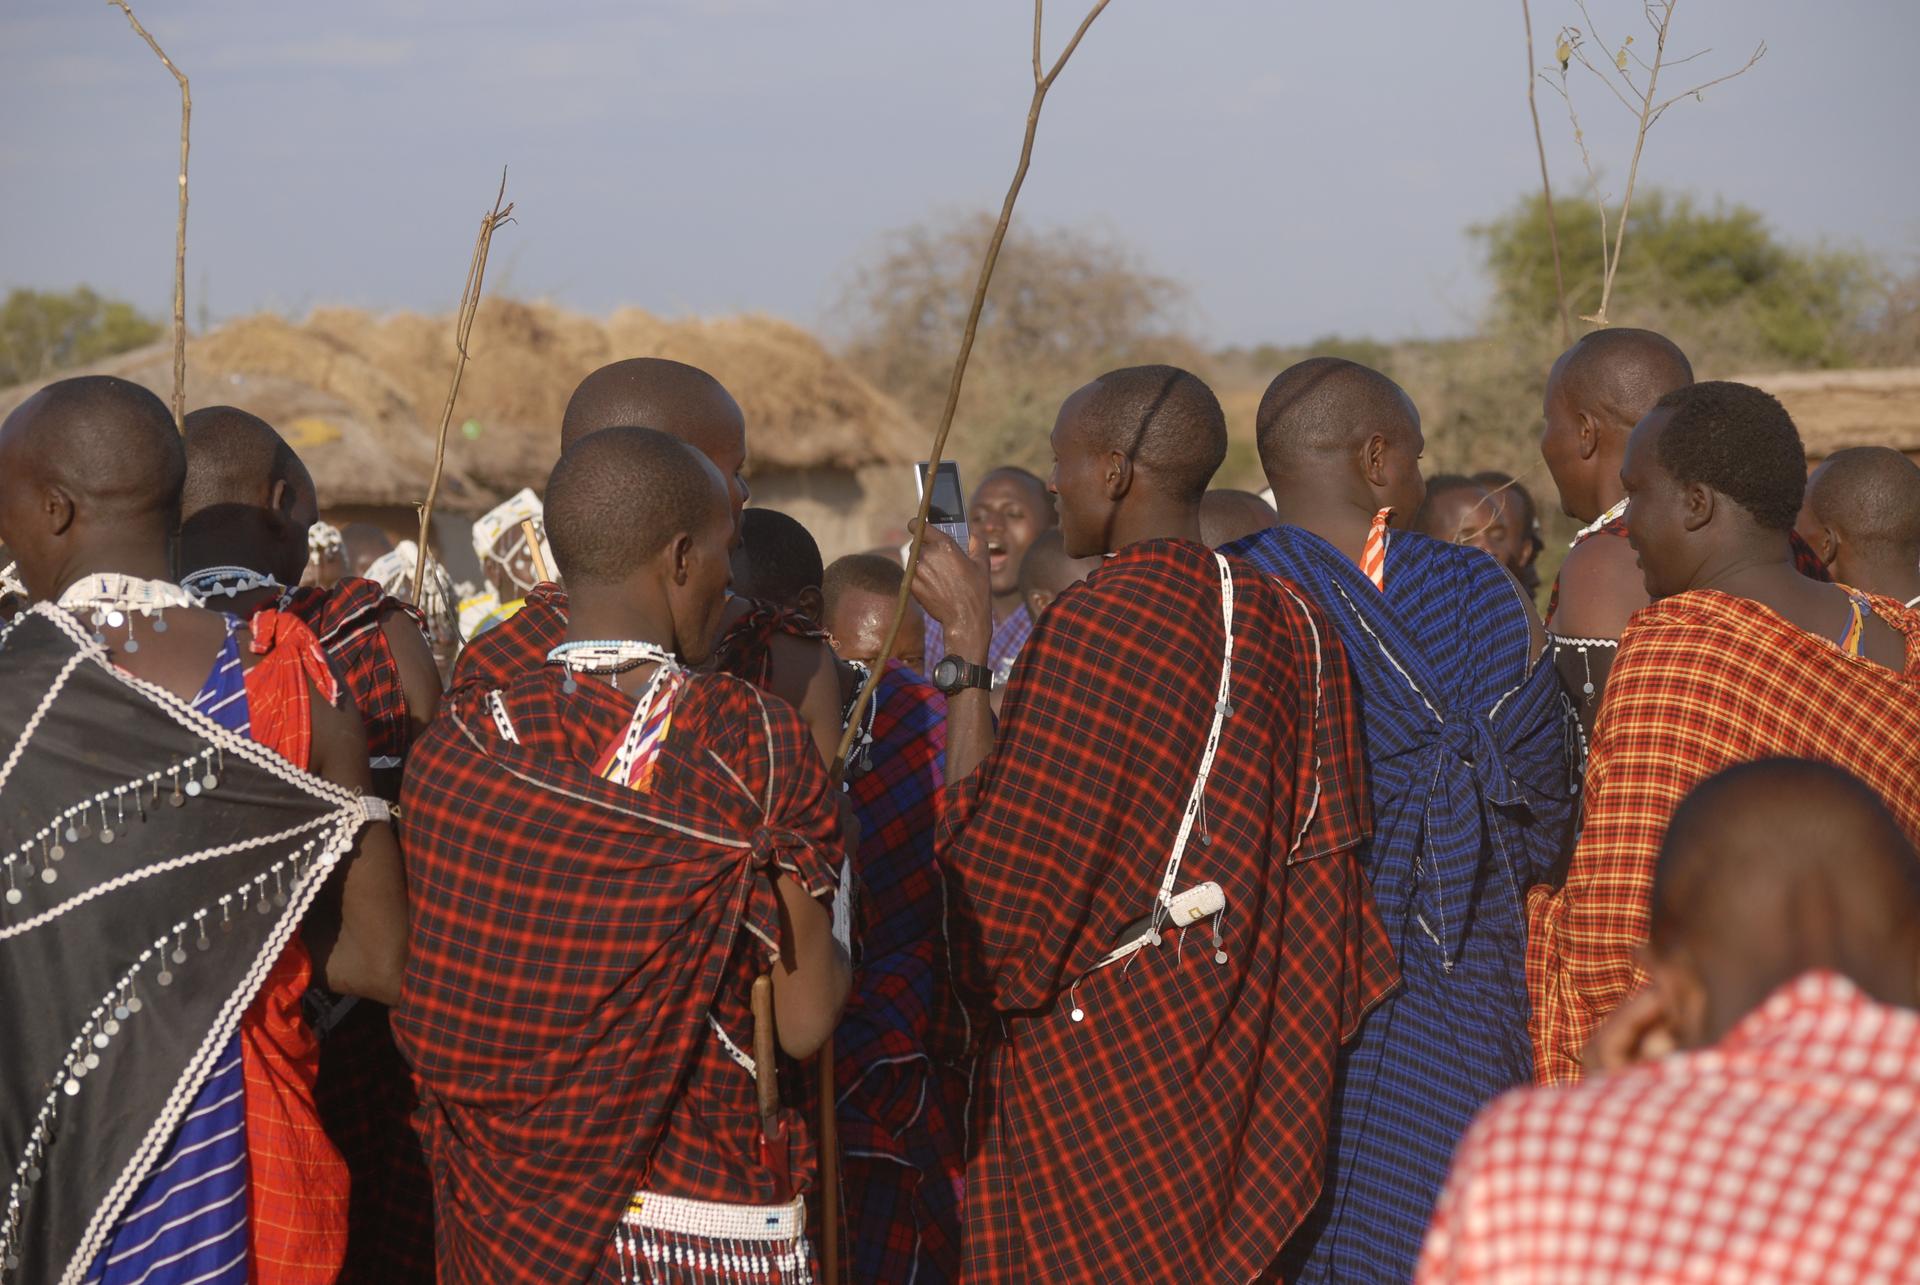 A young Maasai man checks his phone during a ceremonial dance.